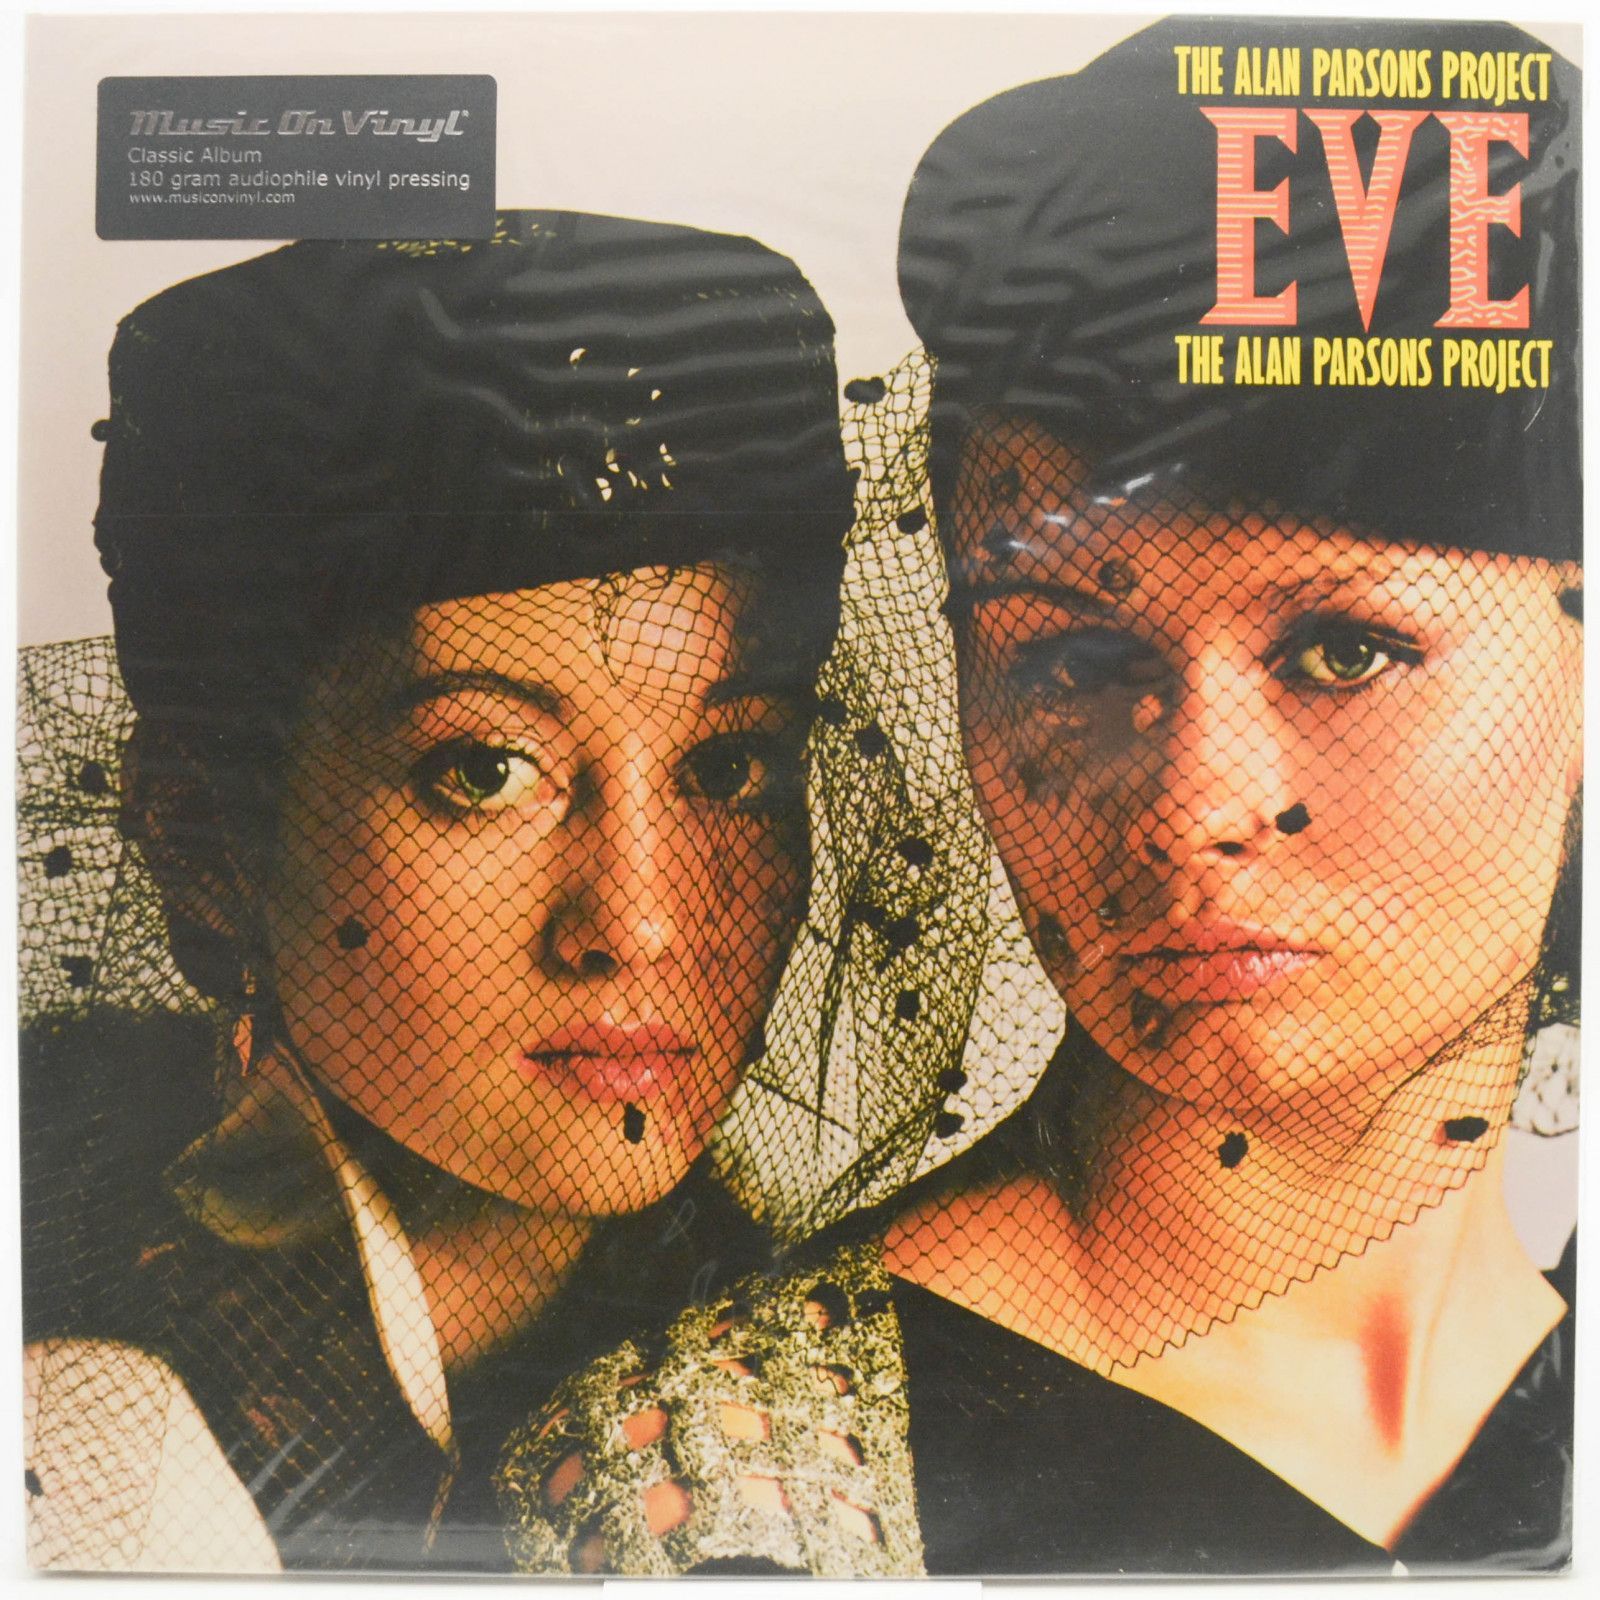 Alan Parsons Project — Eve, 1999